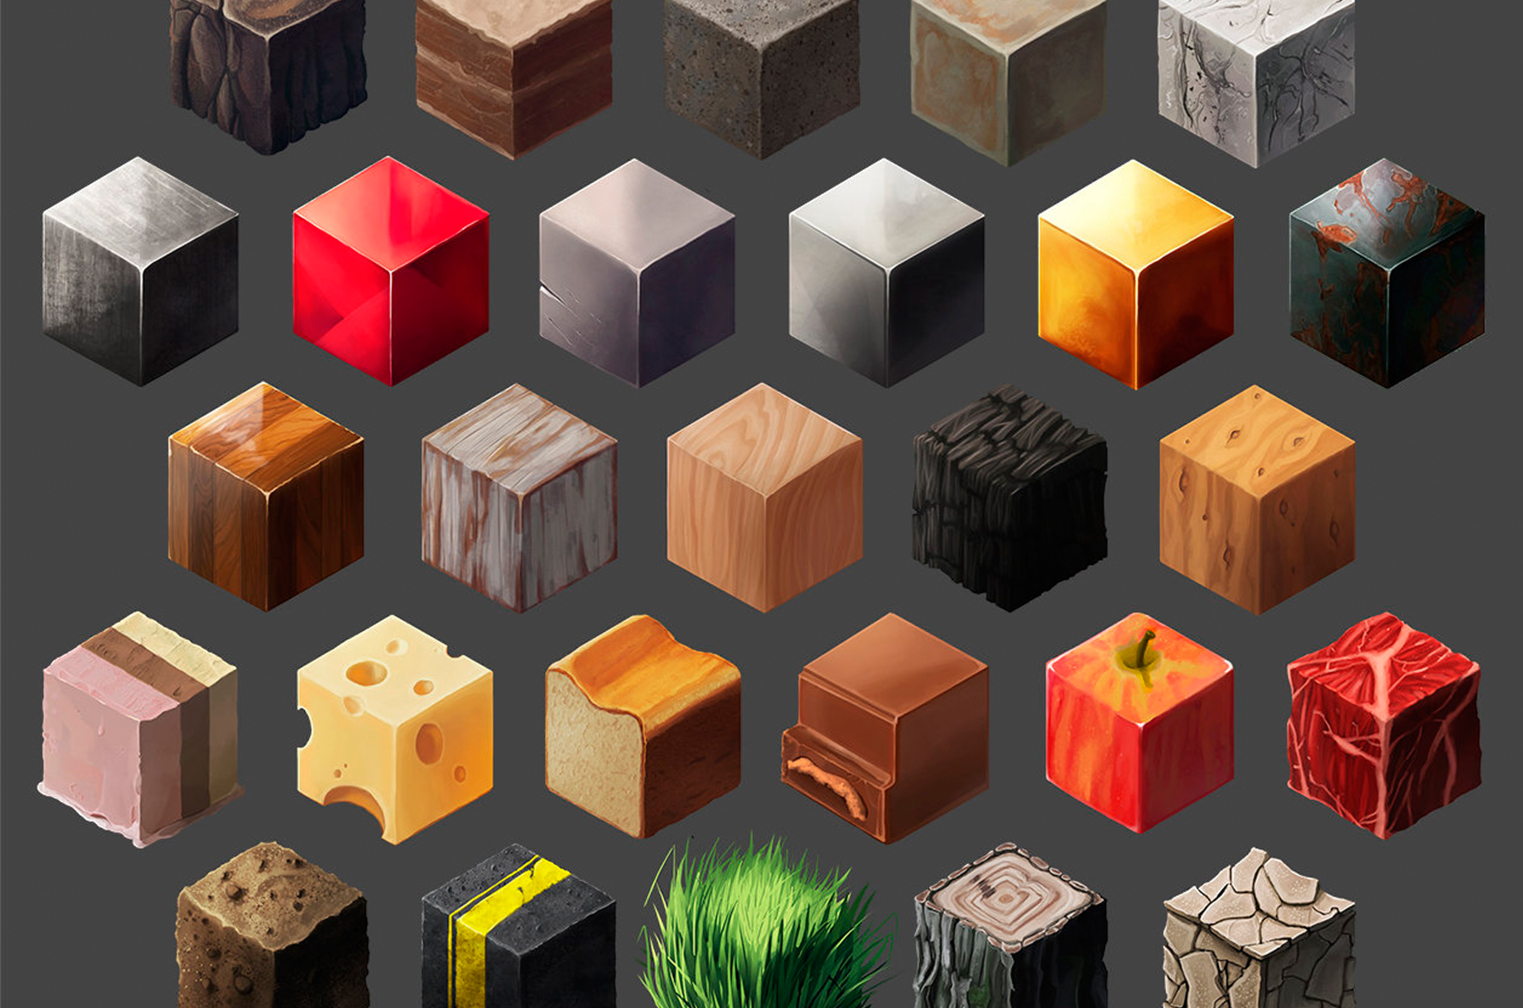 Art cube. Текстурные кубики. Текстурированные кубики. Куб. Кубики с разными текстурами.